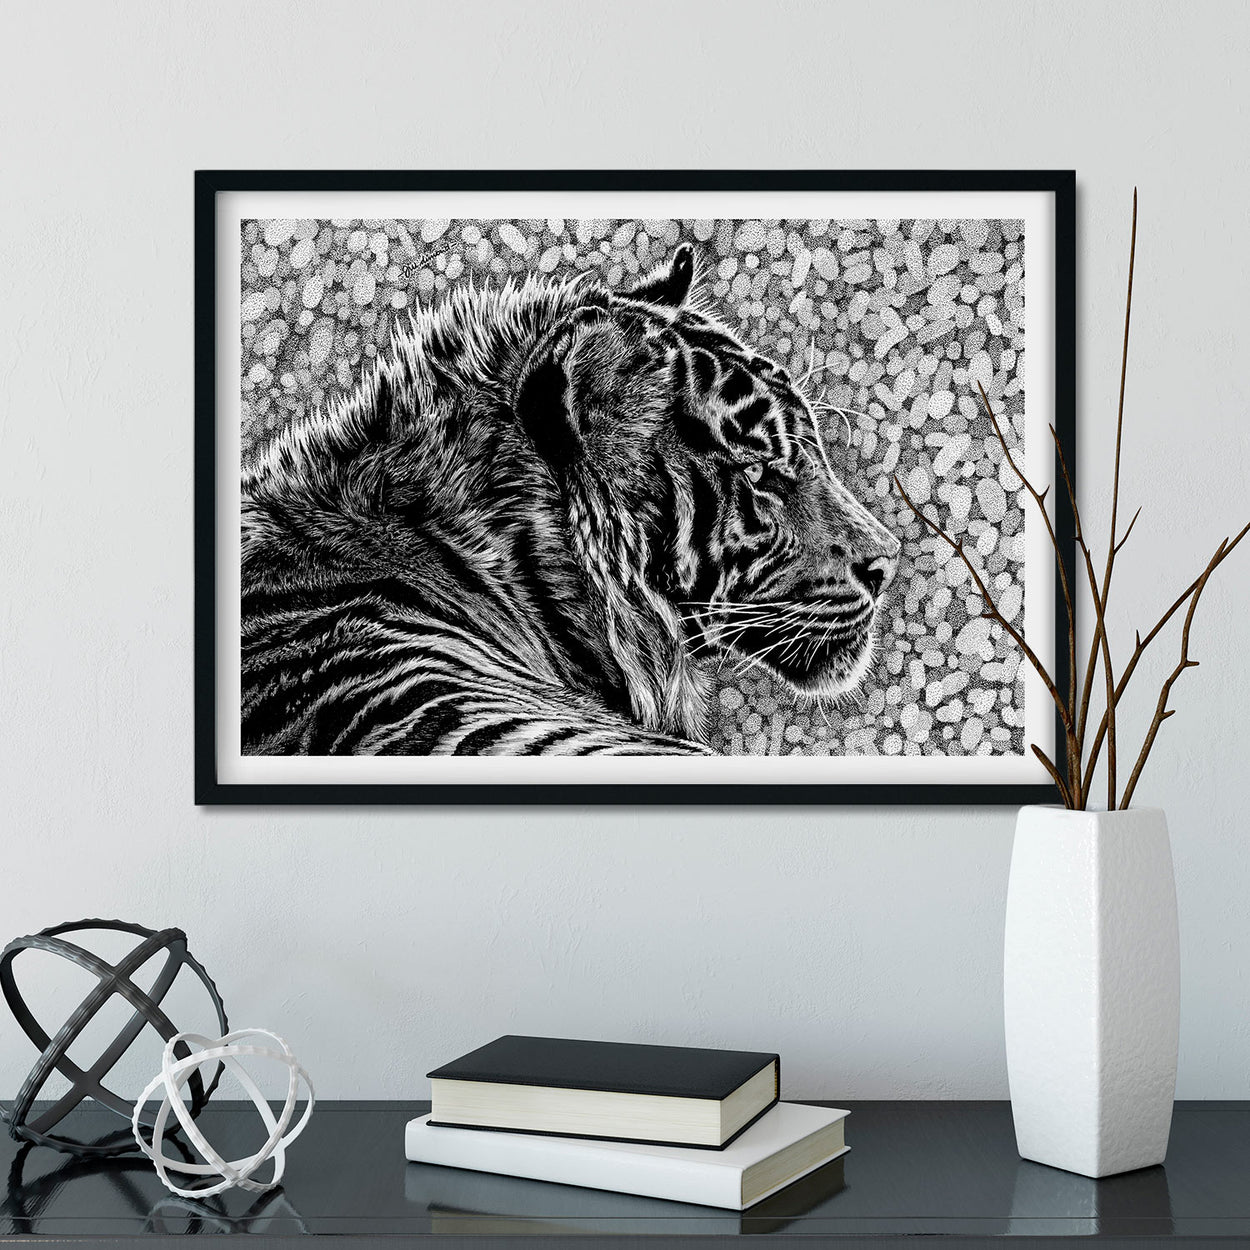 Tiger Wall Art Framed - The Thriving Wild